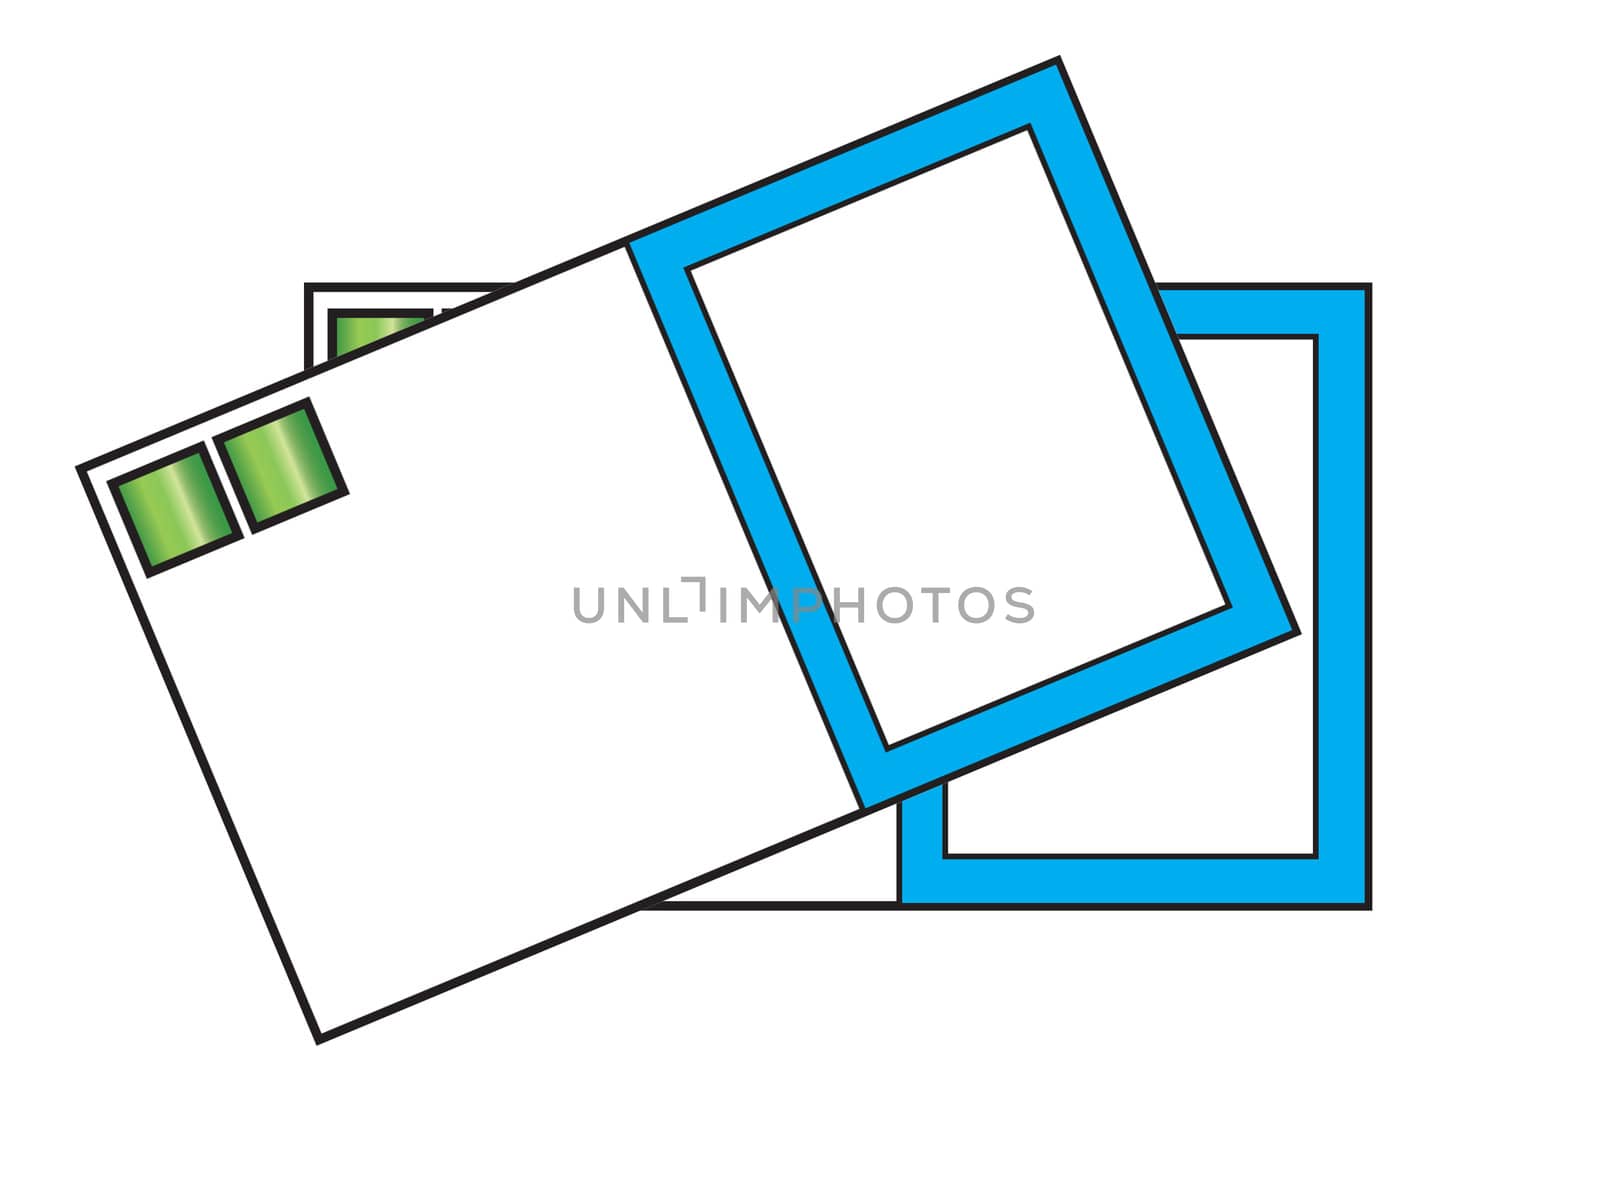 Blank customisable business cards.